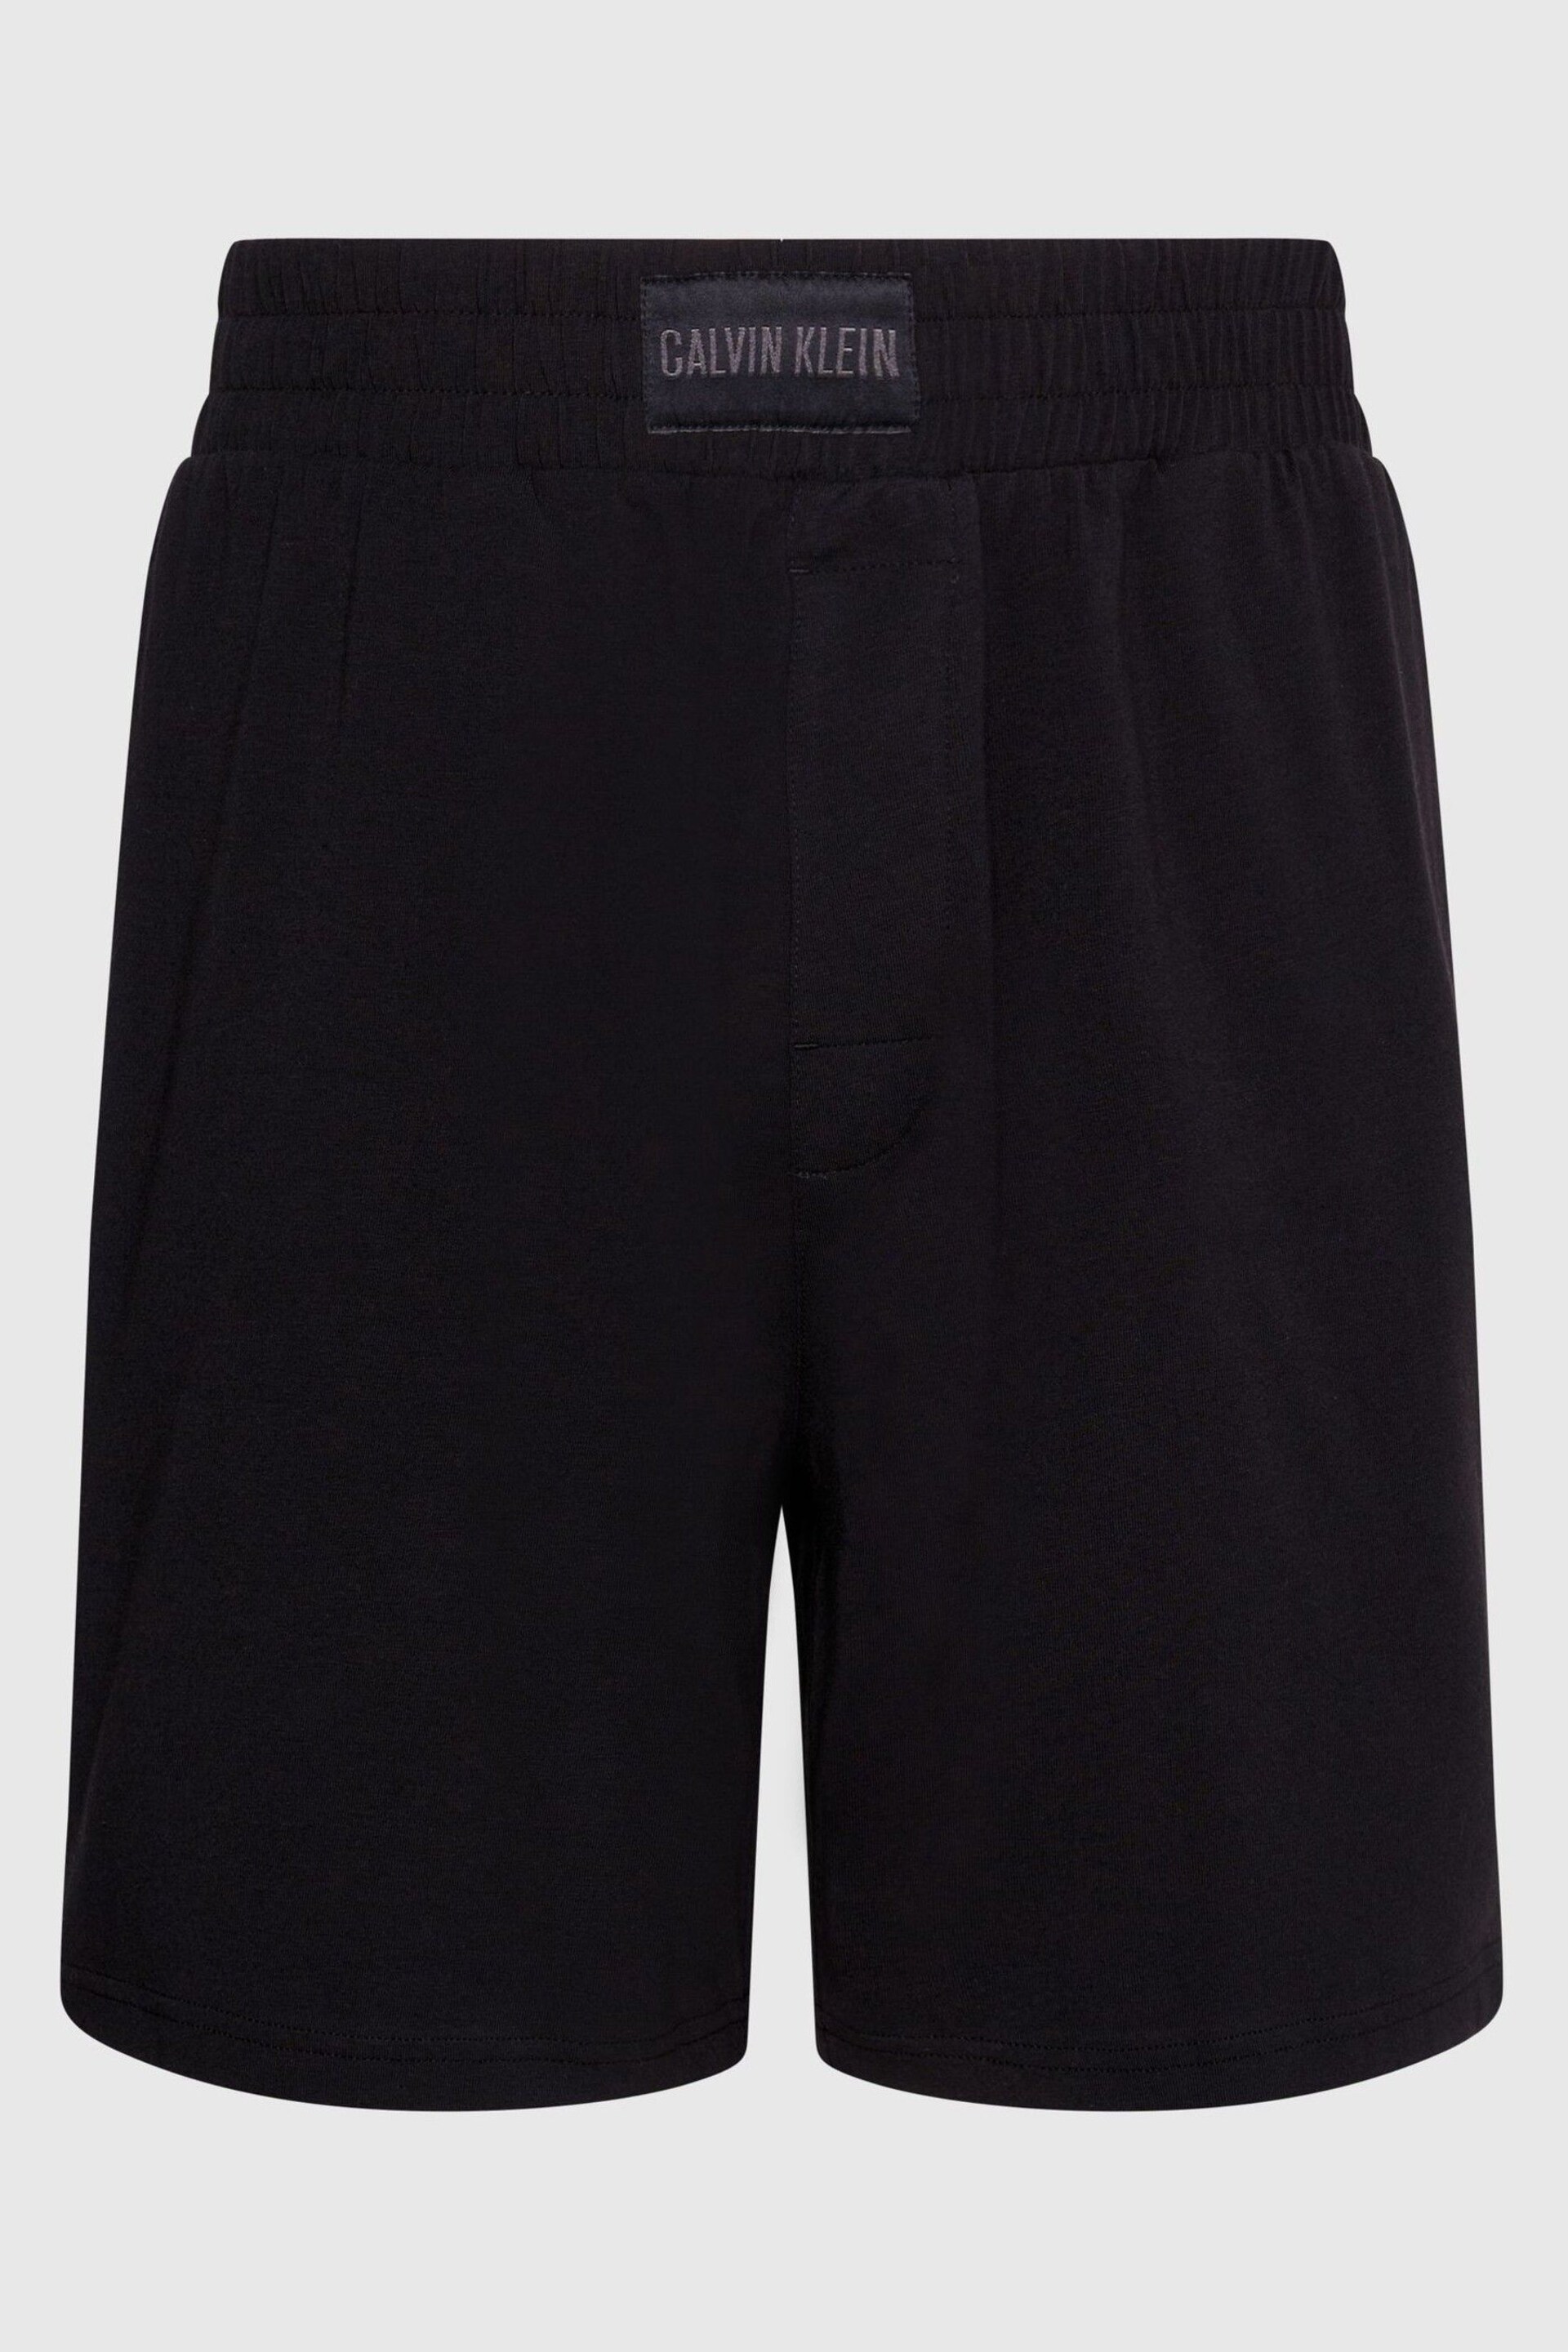 Calvin Klein Black Single Sleep Shorts - Image 5 of 5